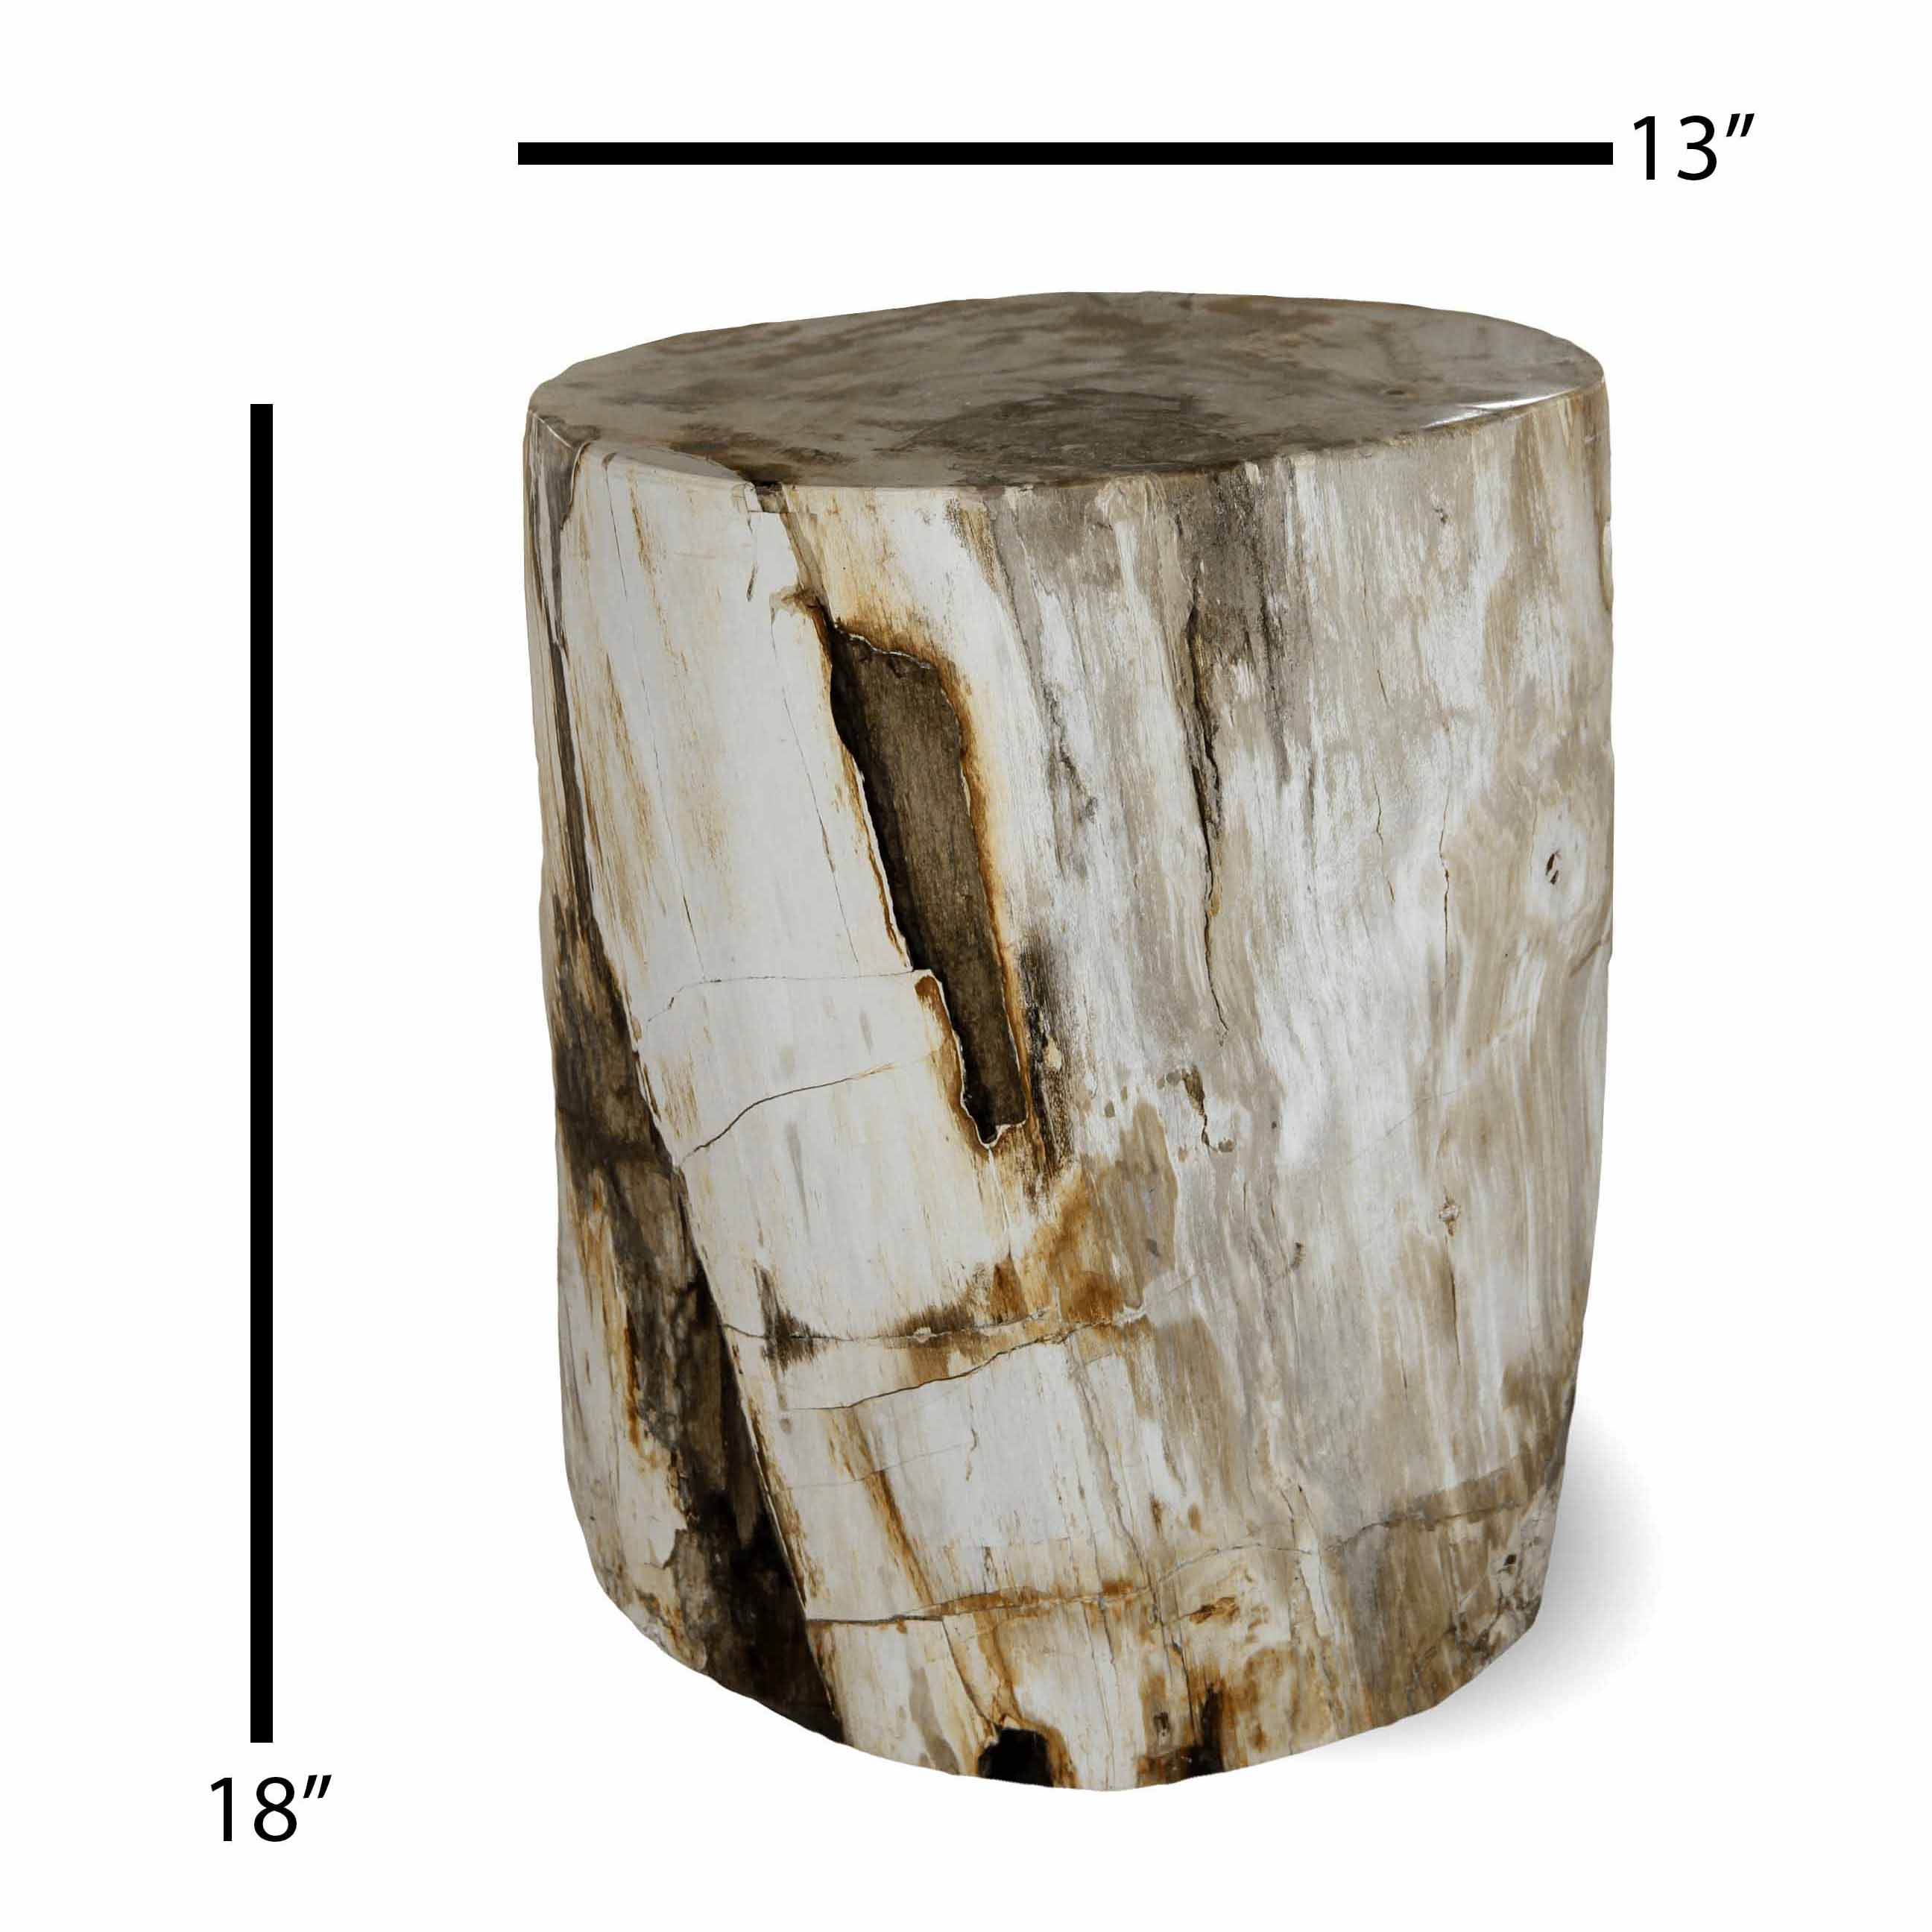 Kalifano Petrified Wood Petrified Wood Round Stump / Stool from Indonesia - 18" / 209 lbs PWS3800.003